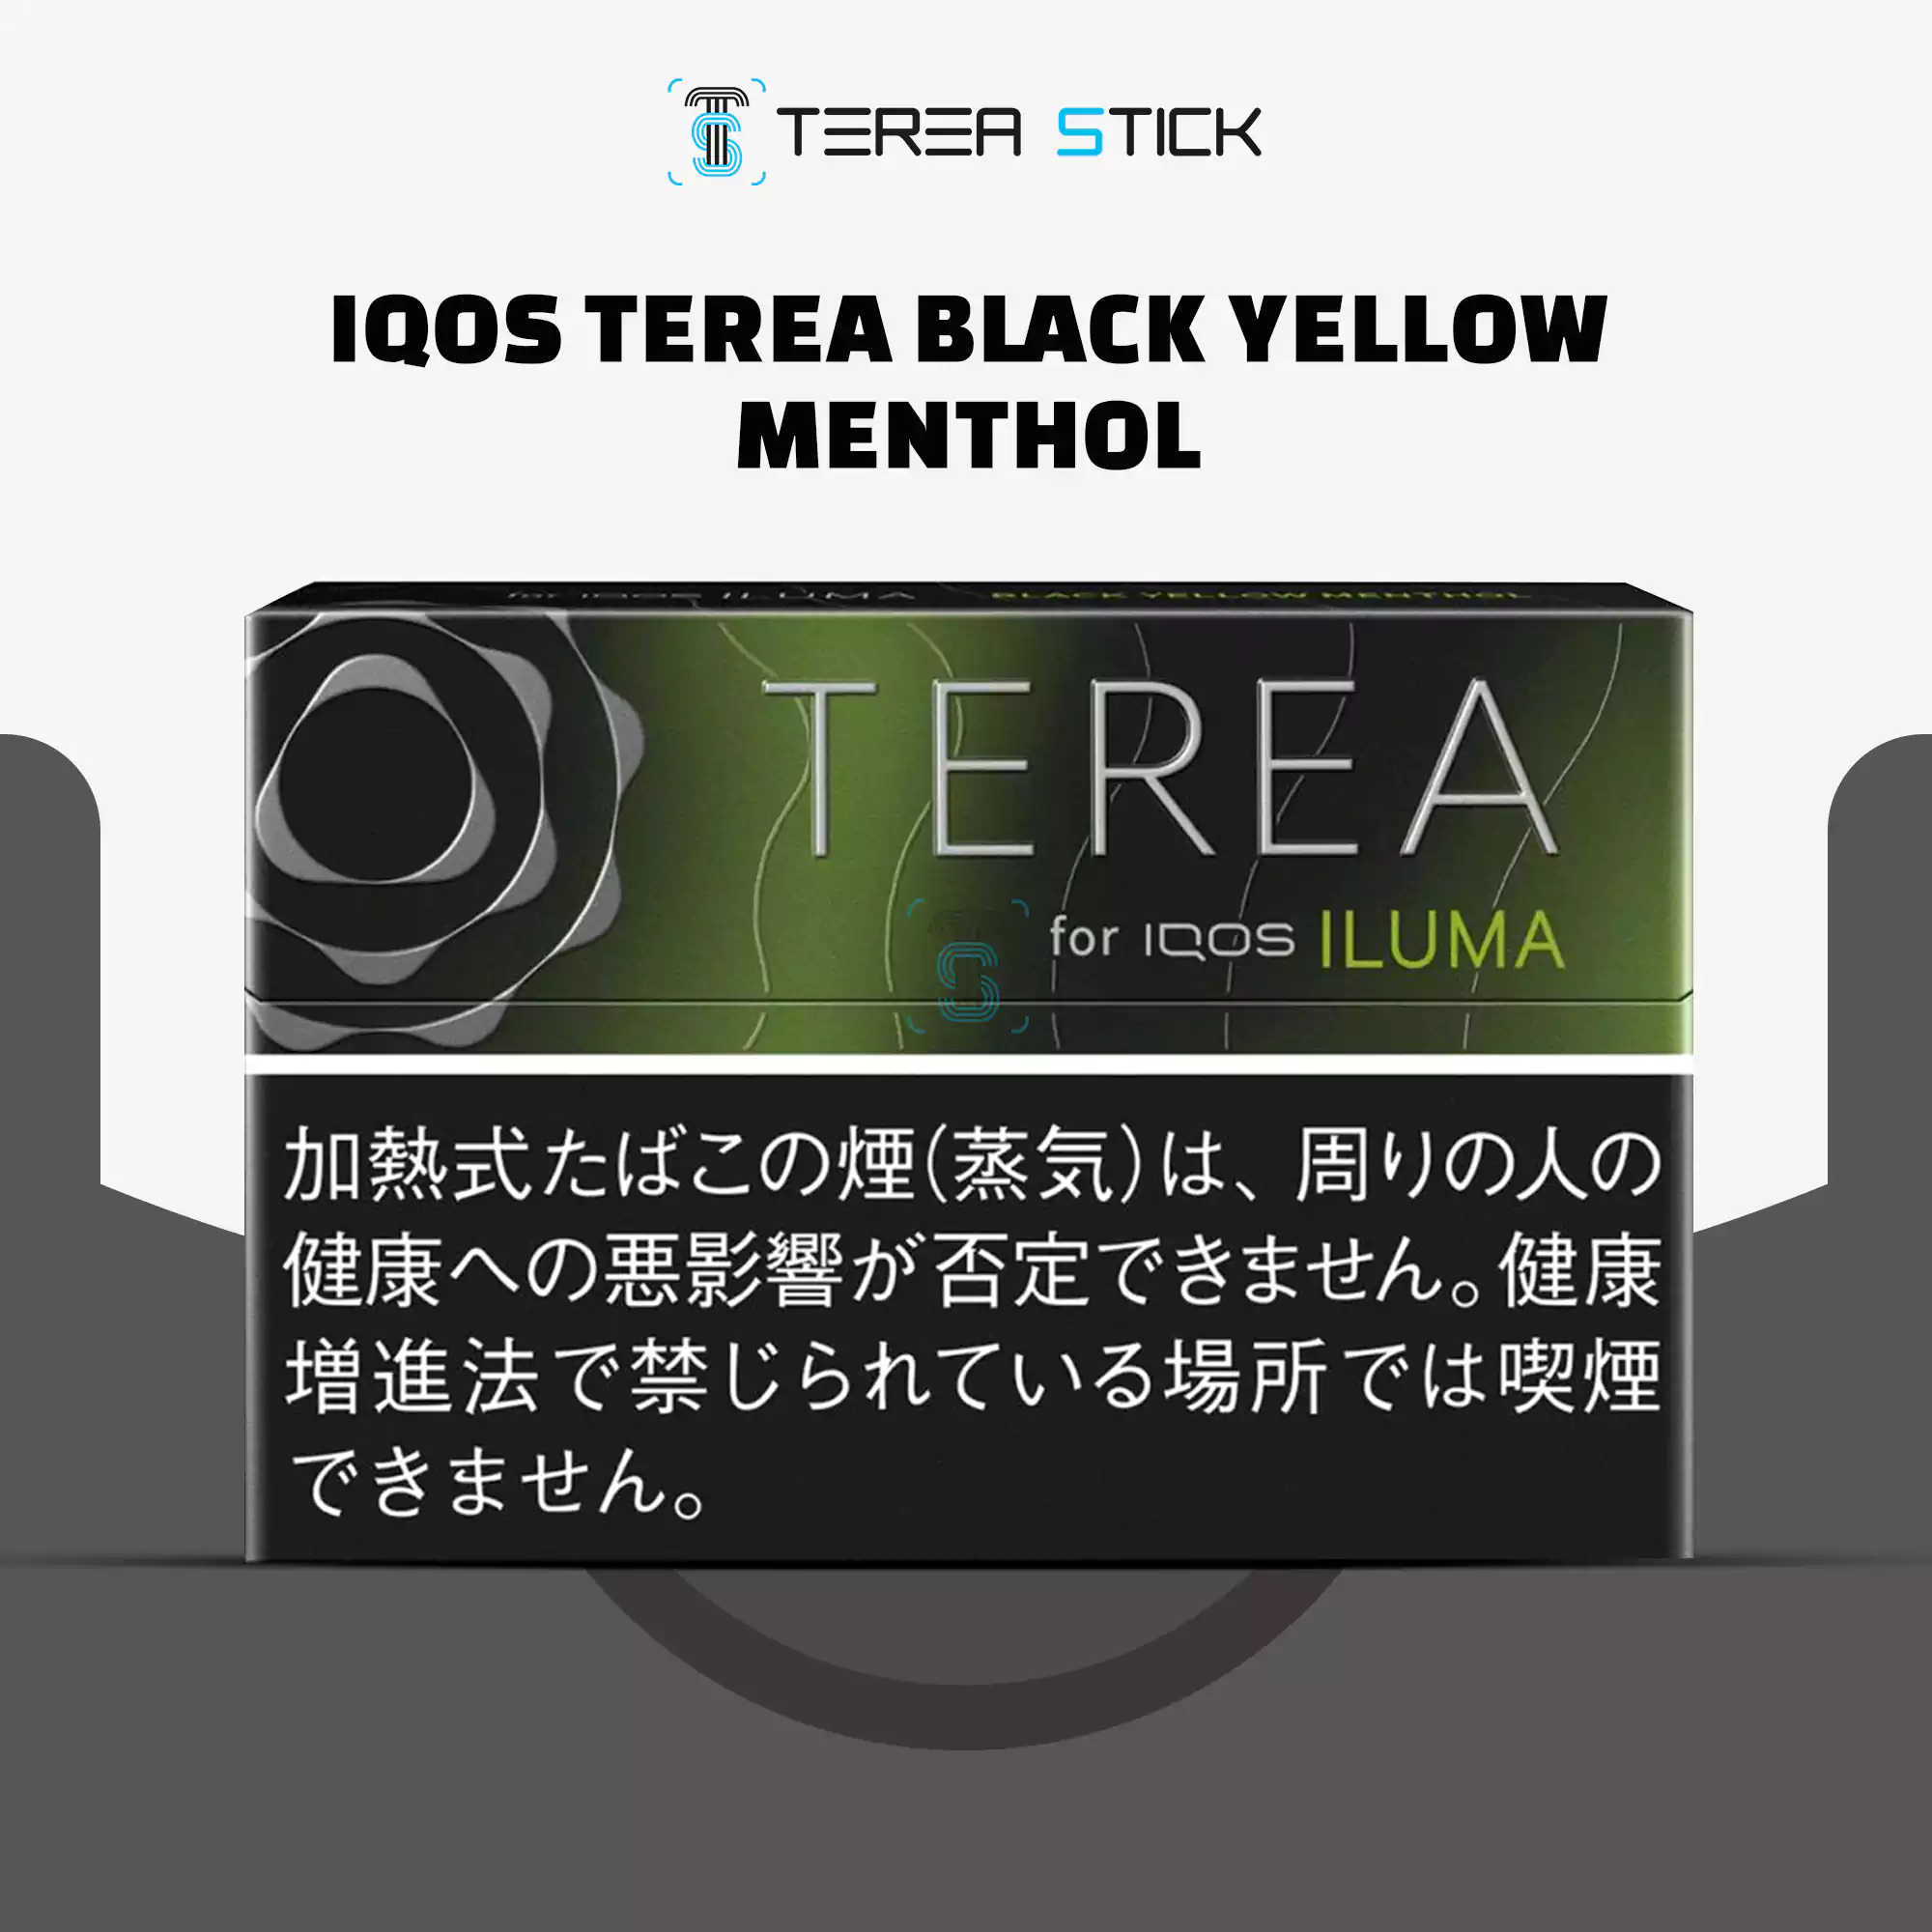 IQOS TEREA Black Yellow Menthol In UAE